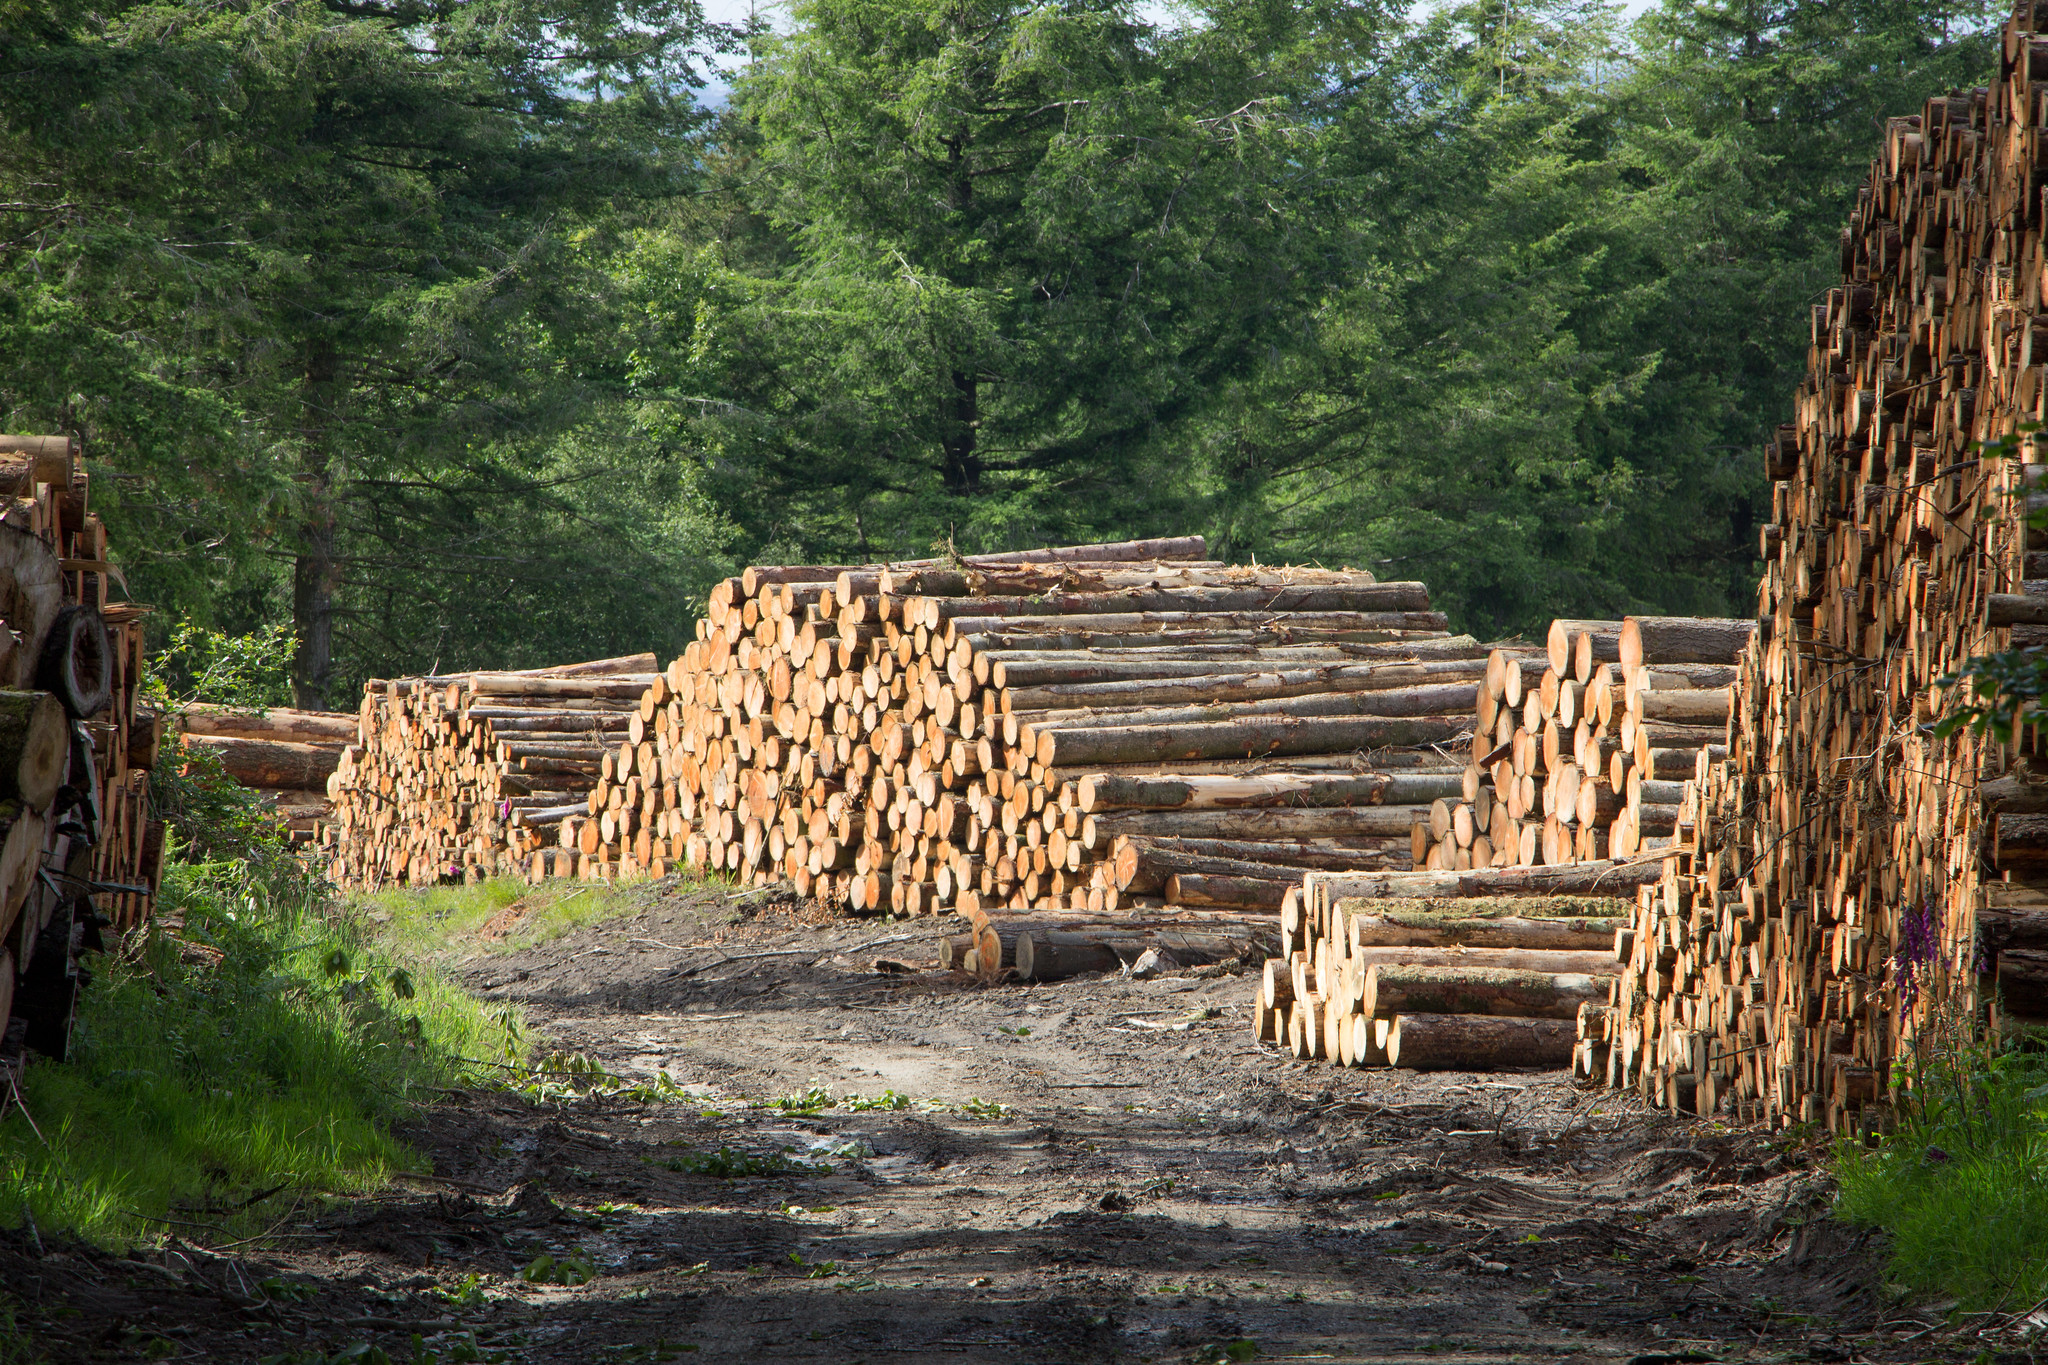 Logging in Brittany, France